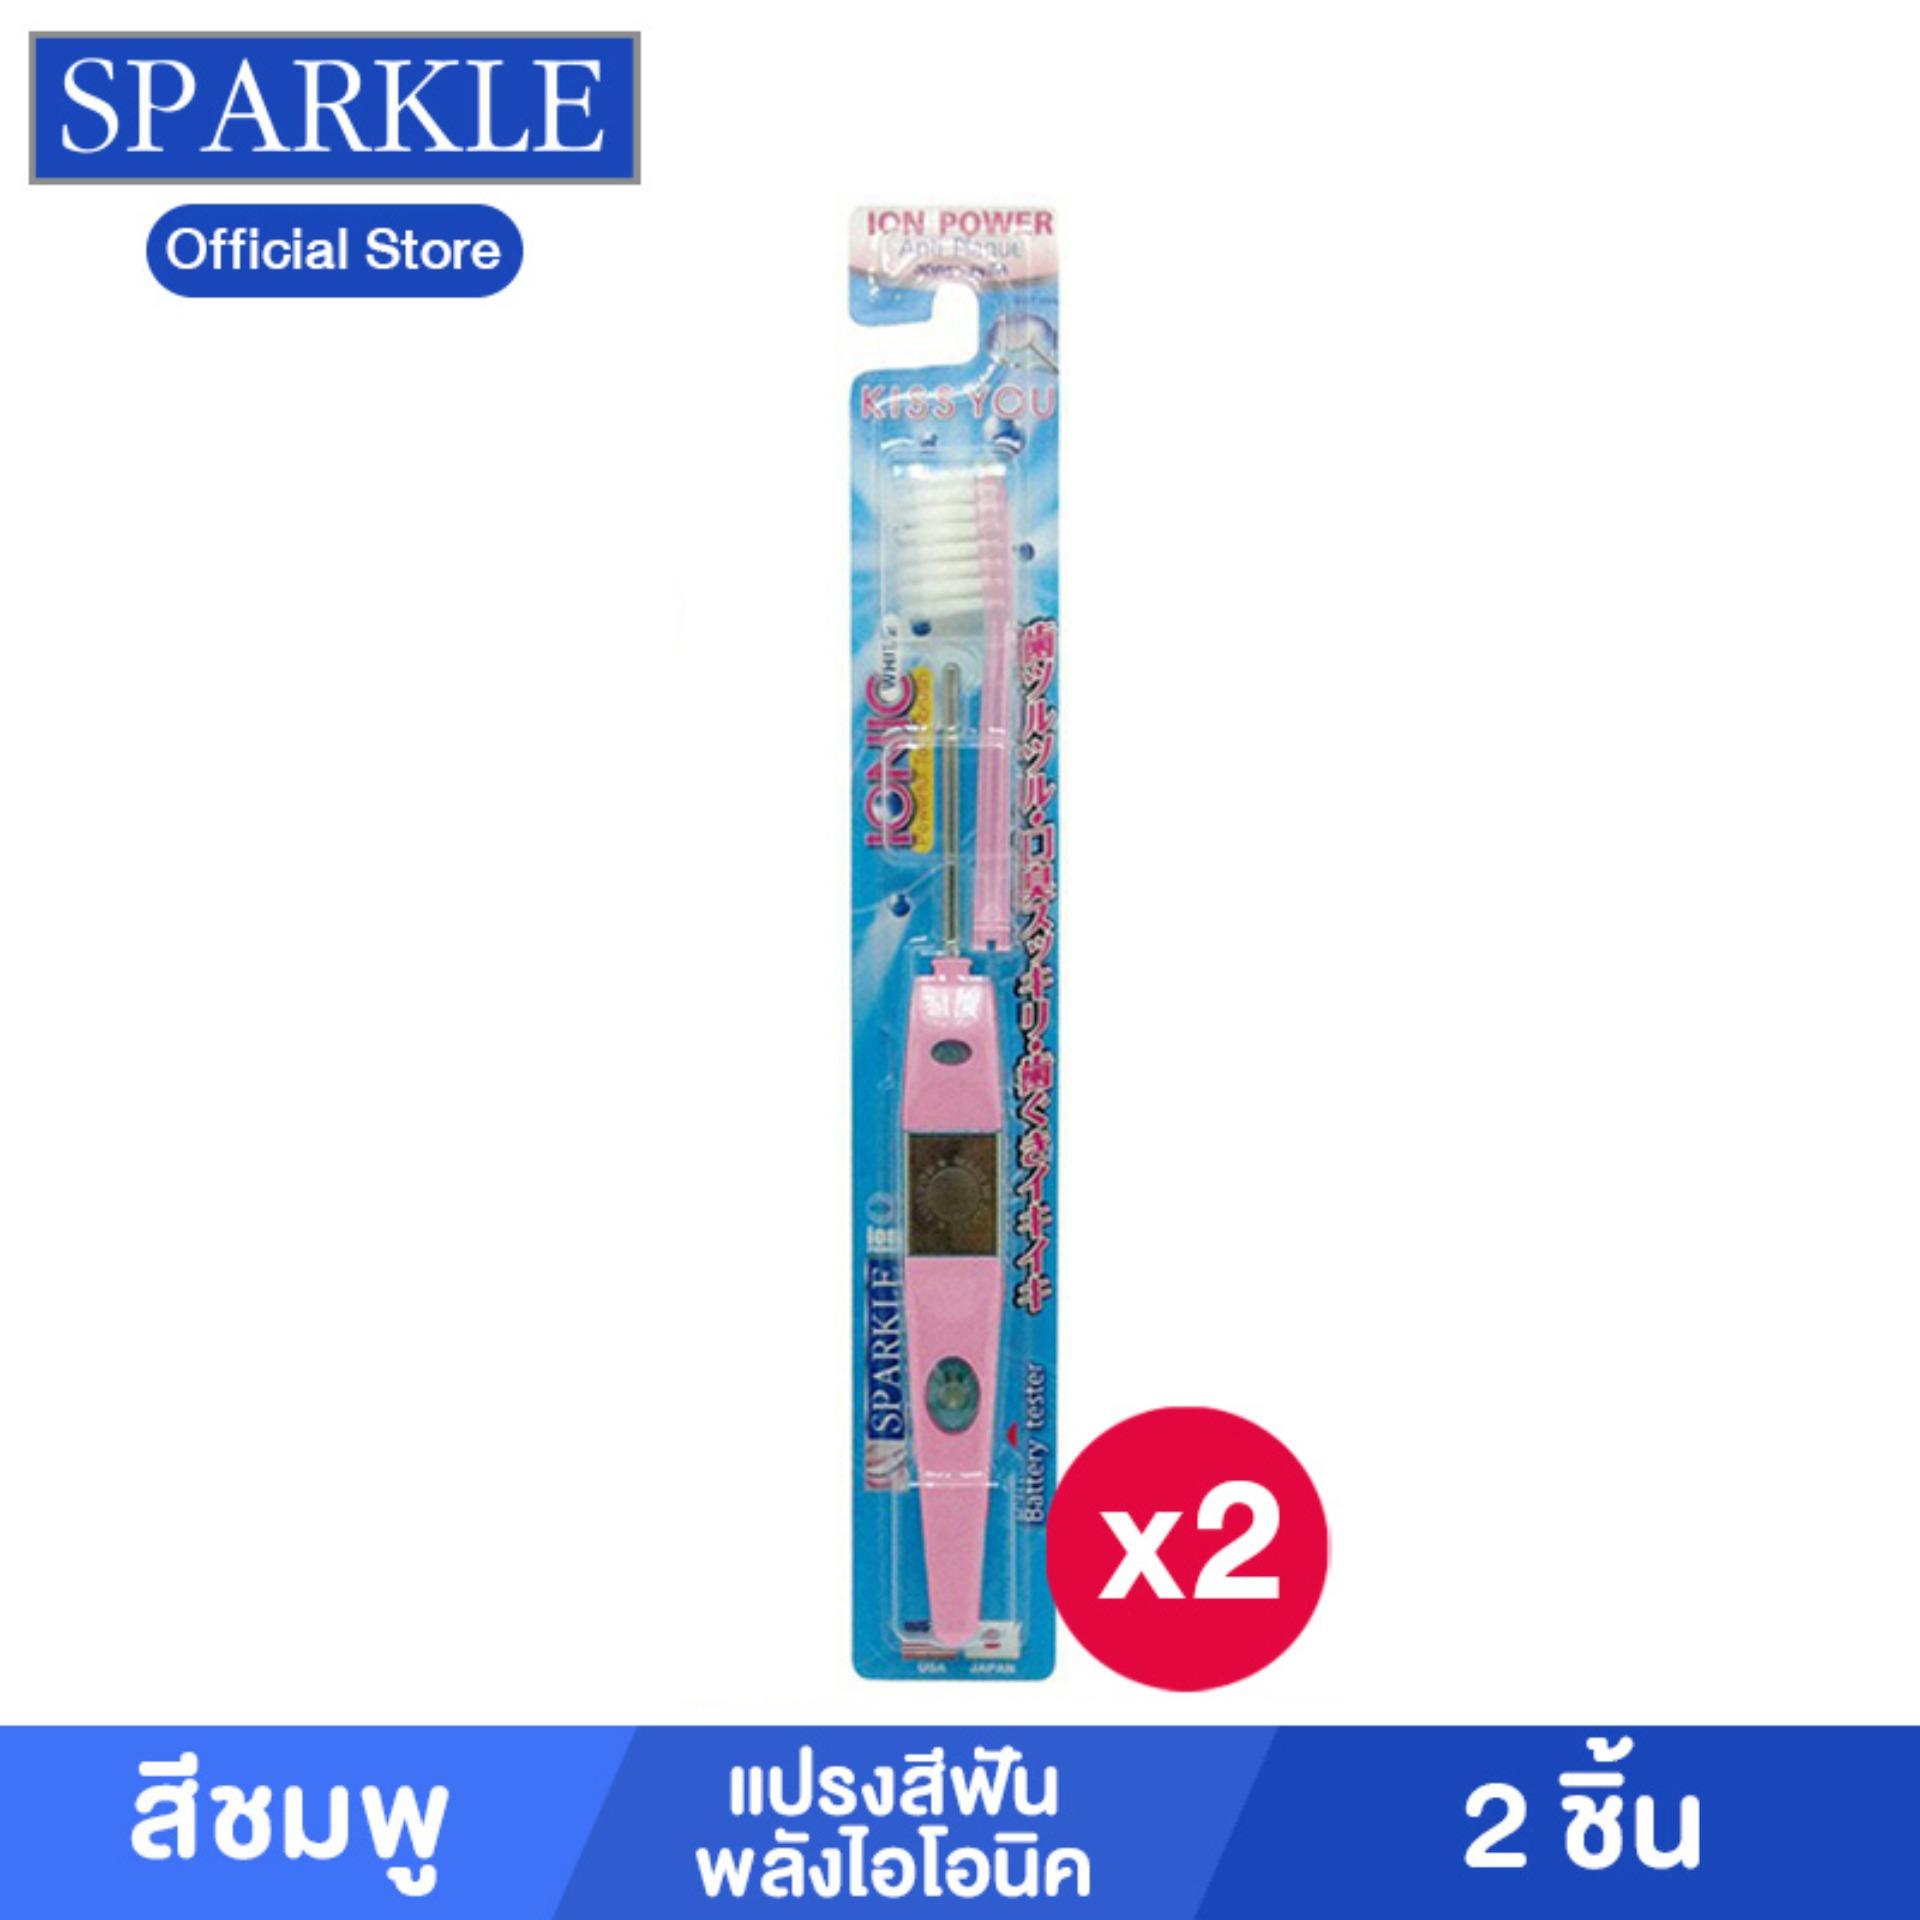 sparkle pro toothbrush